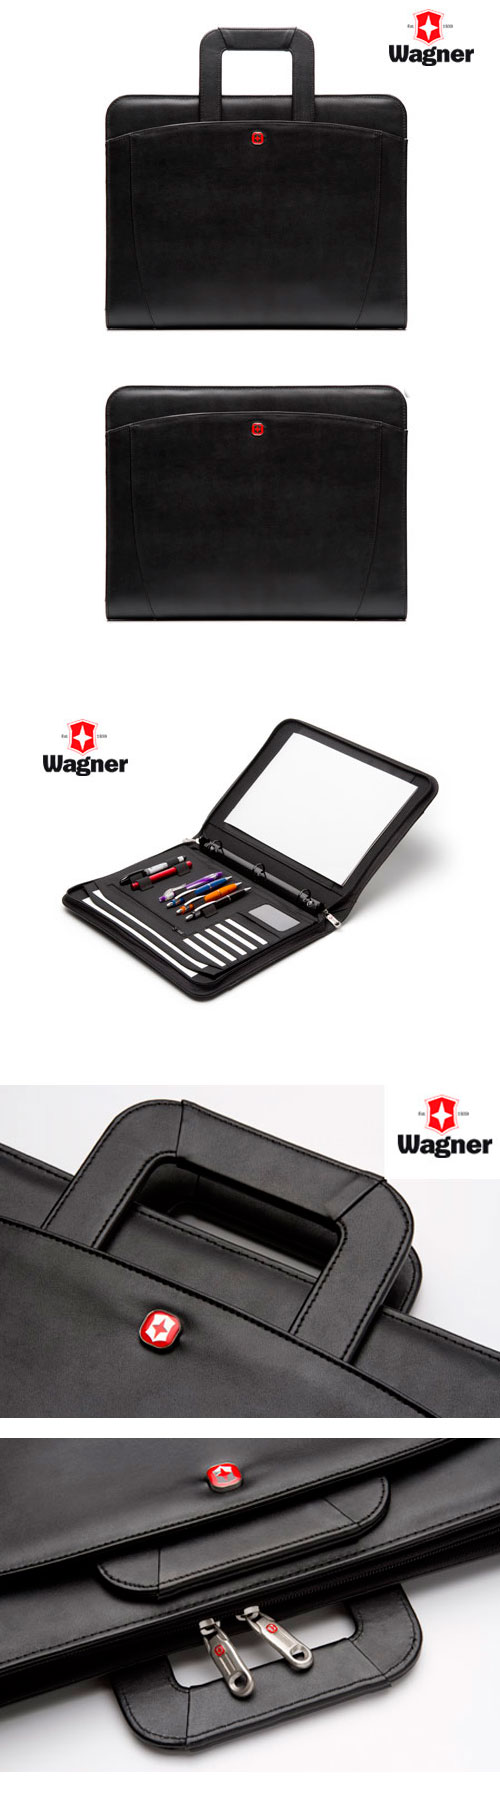 Portfolio Stark Premium Wagner